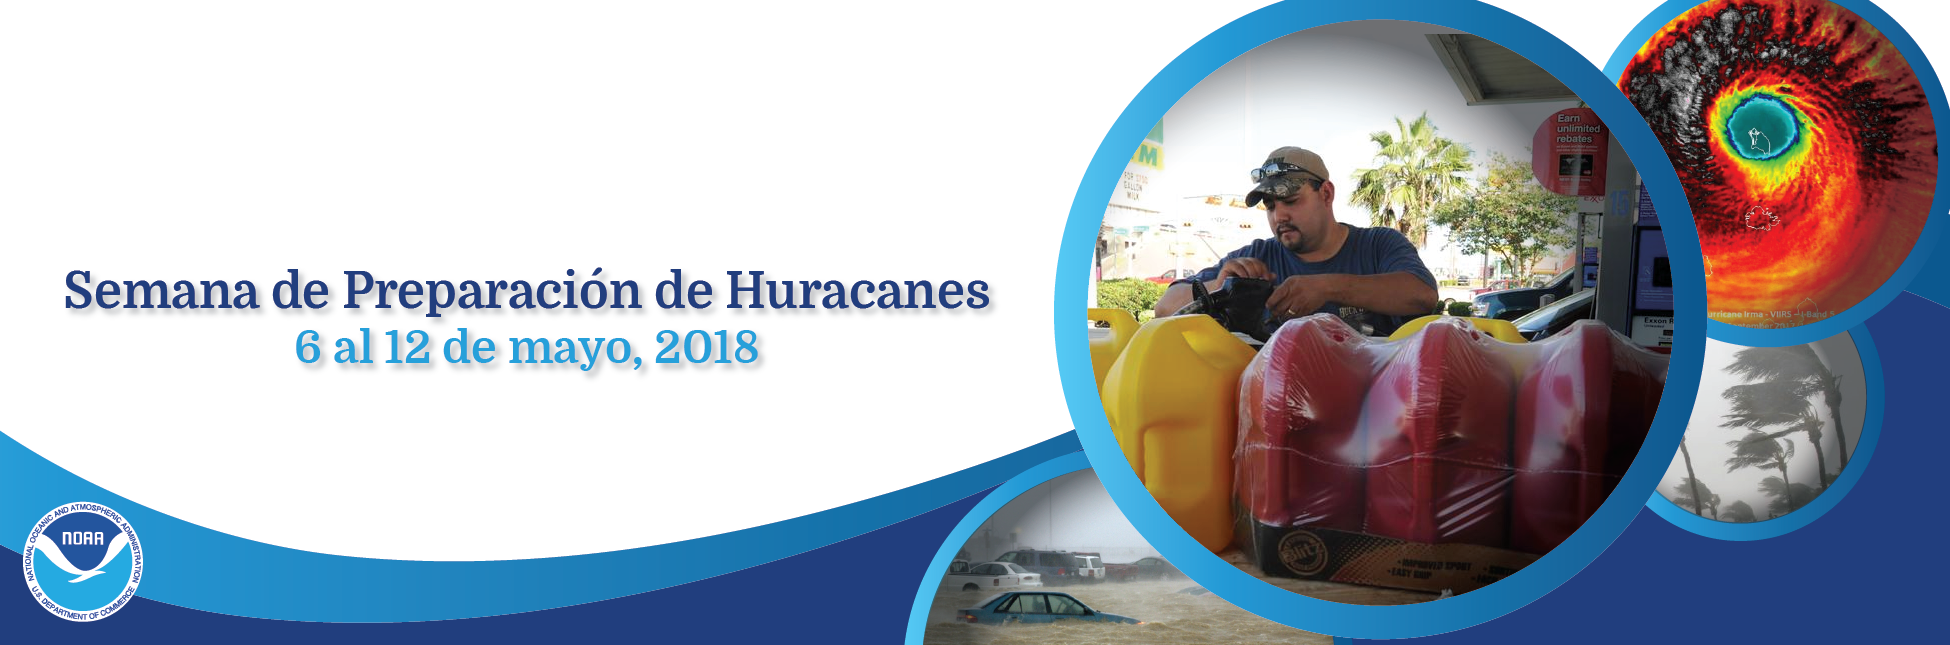 Semana de PreparaciÃ³n de Huracanes 6 al 12 de mayo, 2018